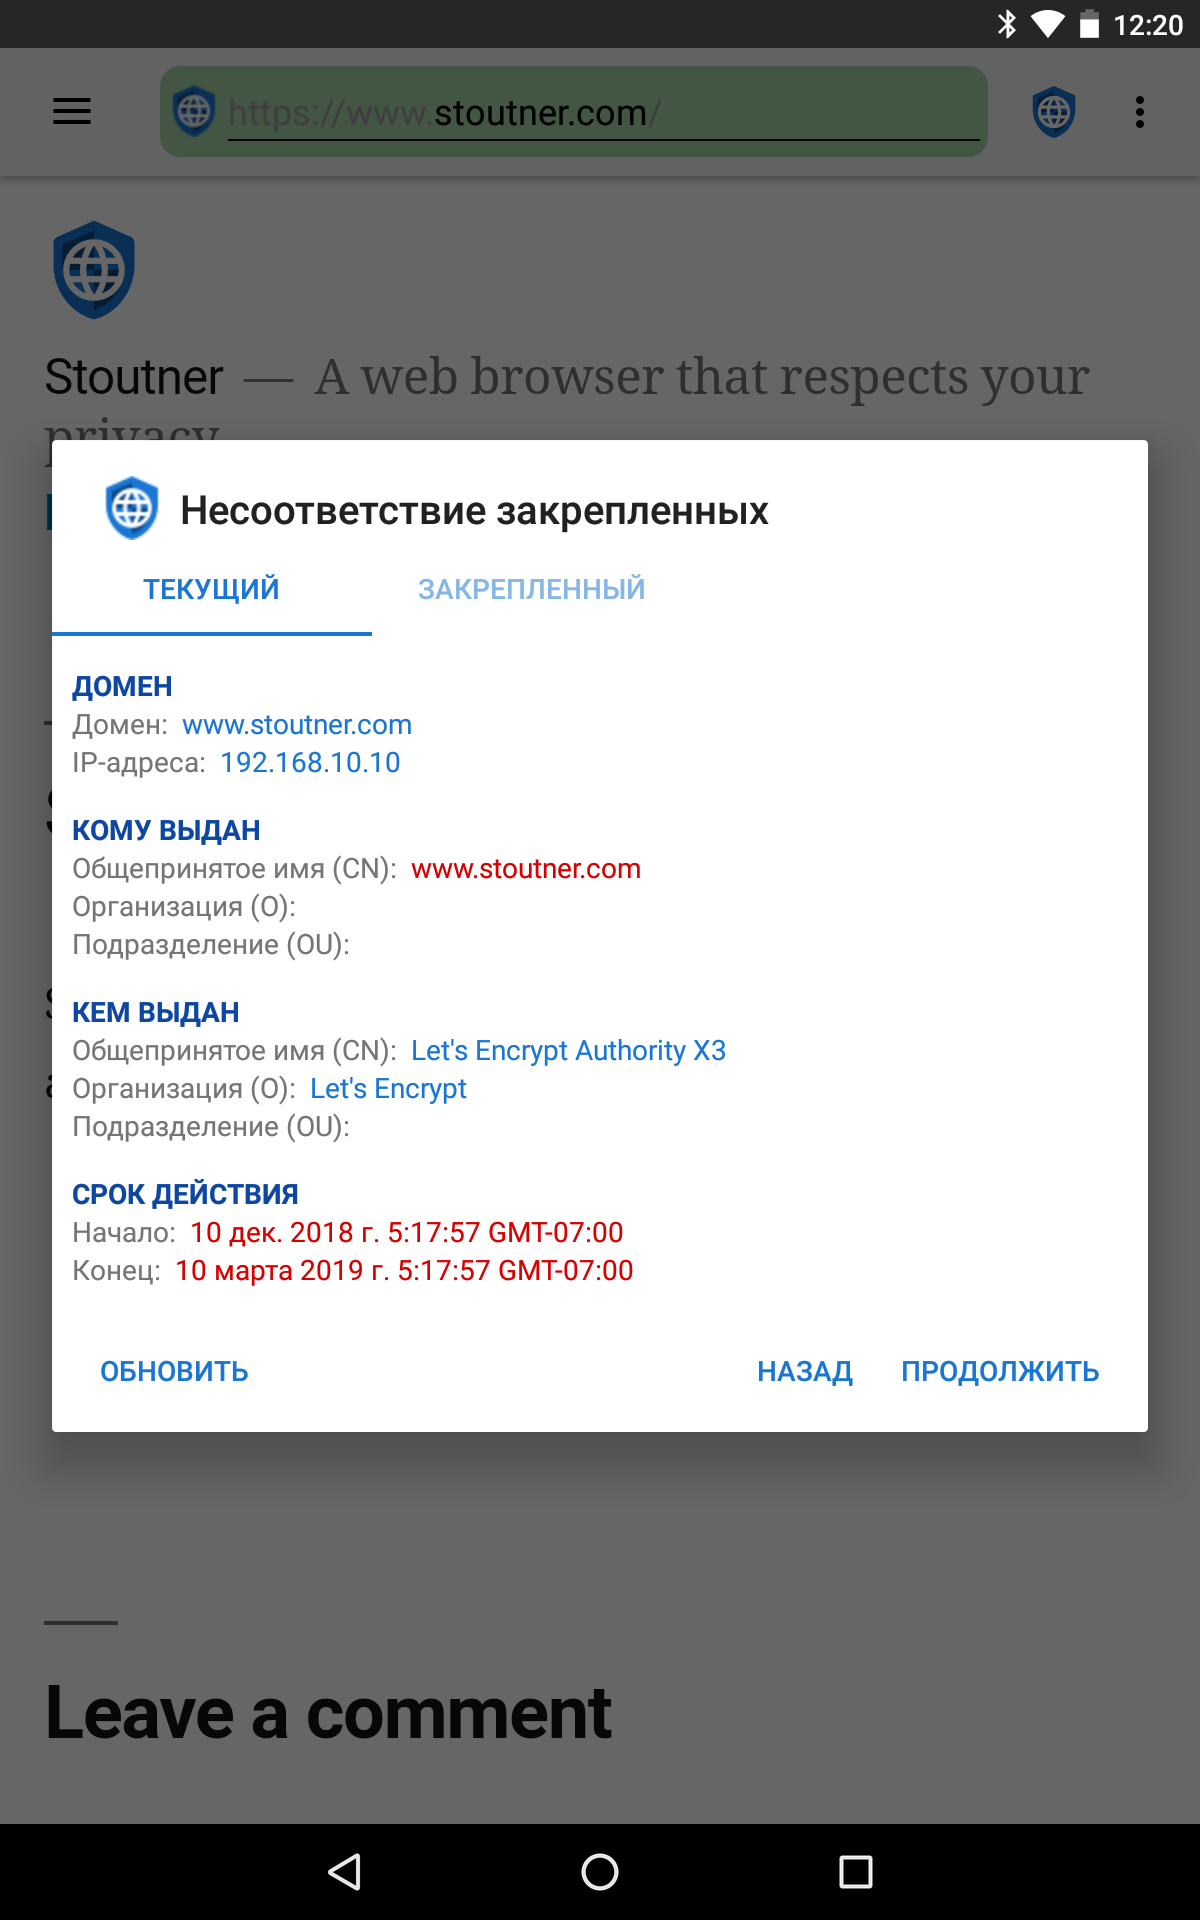 fastlane/metadata/android/ru-RU/images/sevenInchScreenshots/02-PinnedMismatch.png